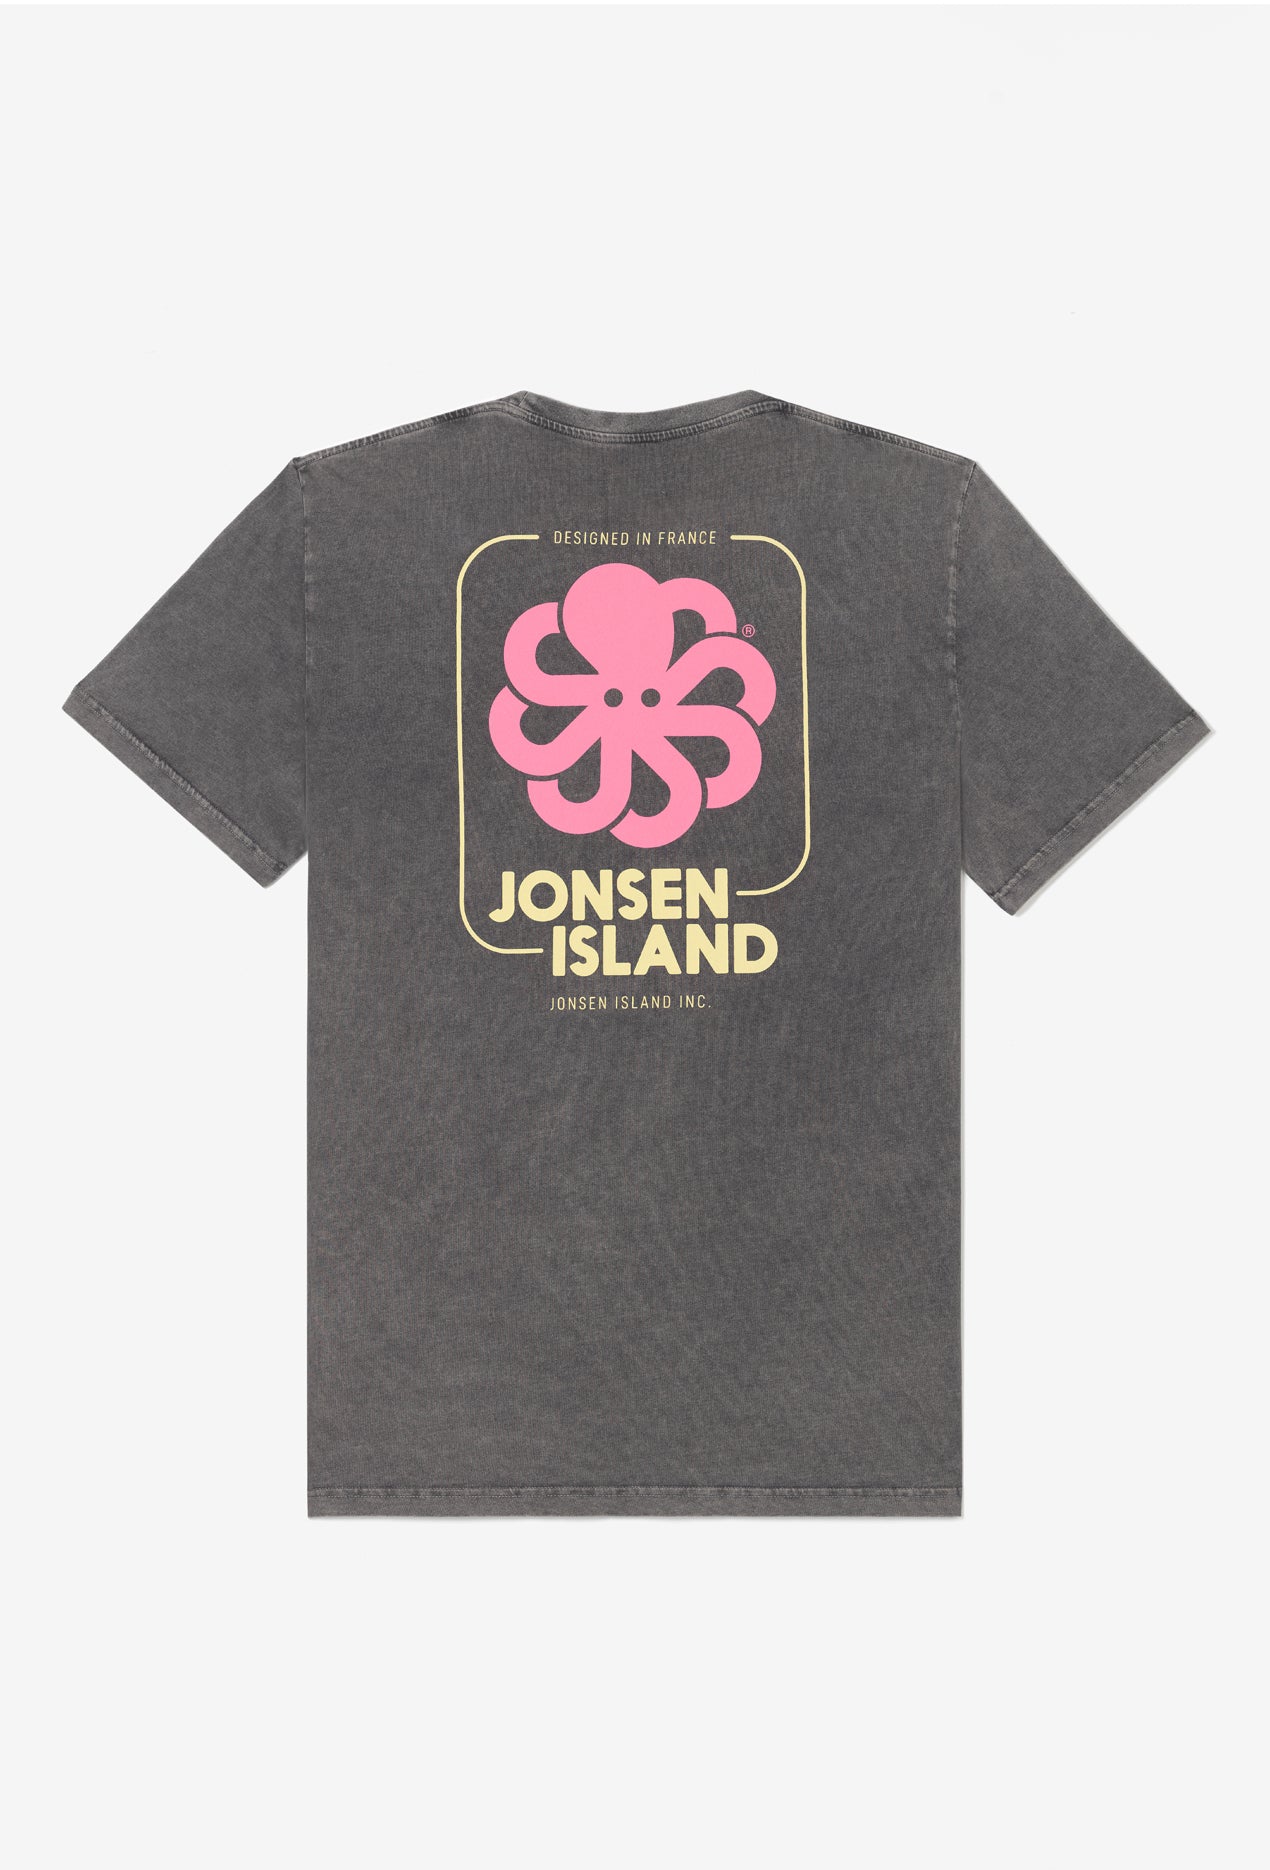 Jonsen Island - T-shirt Classic - Big Label - Black